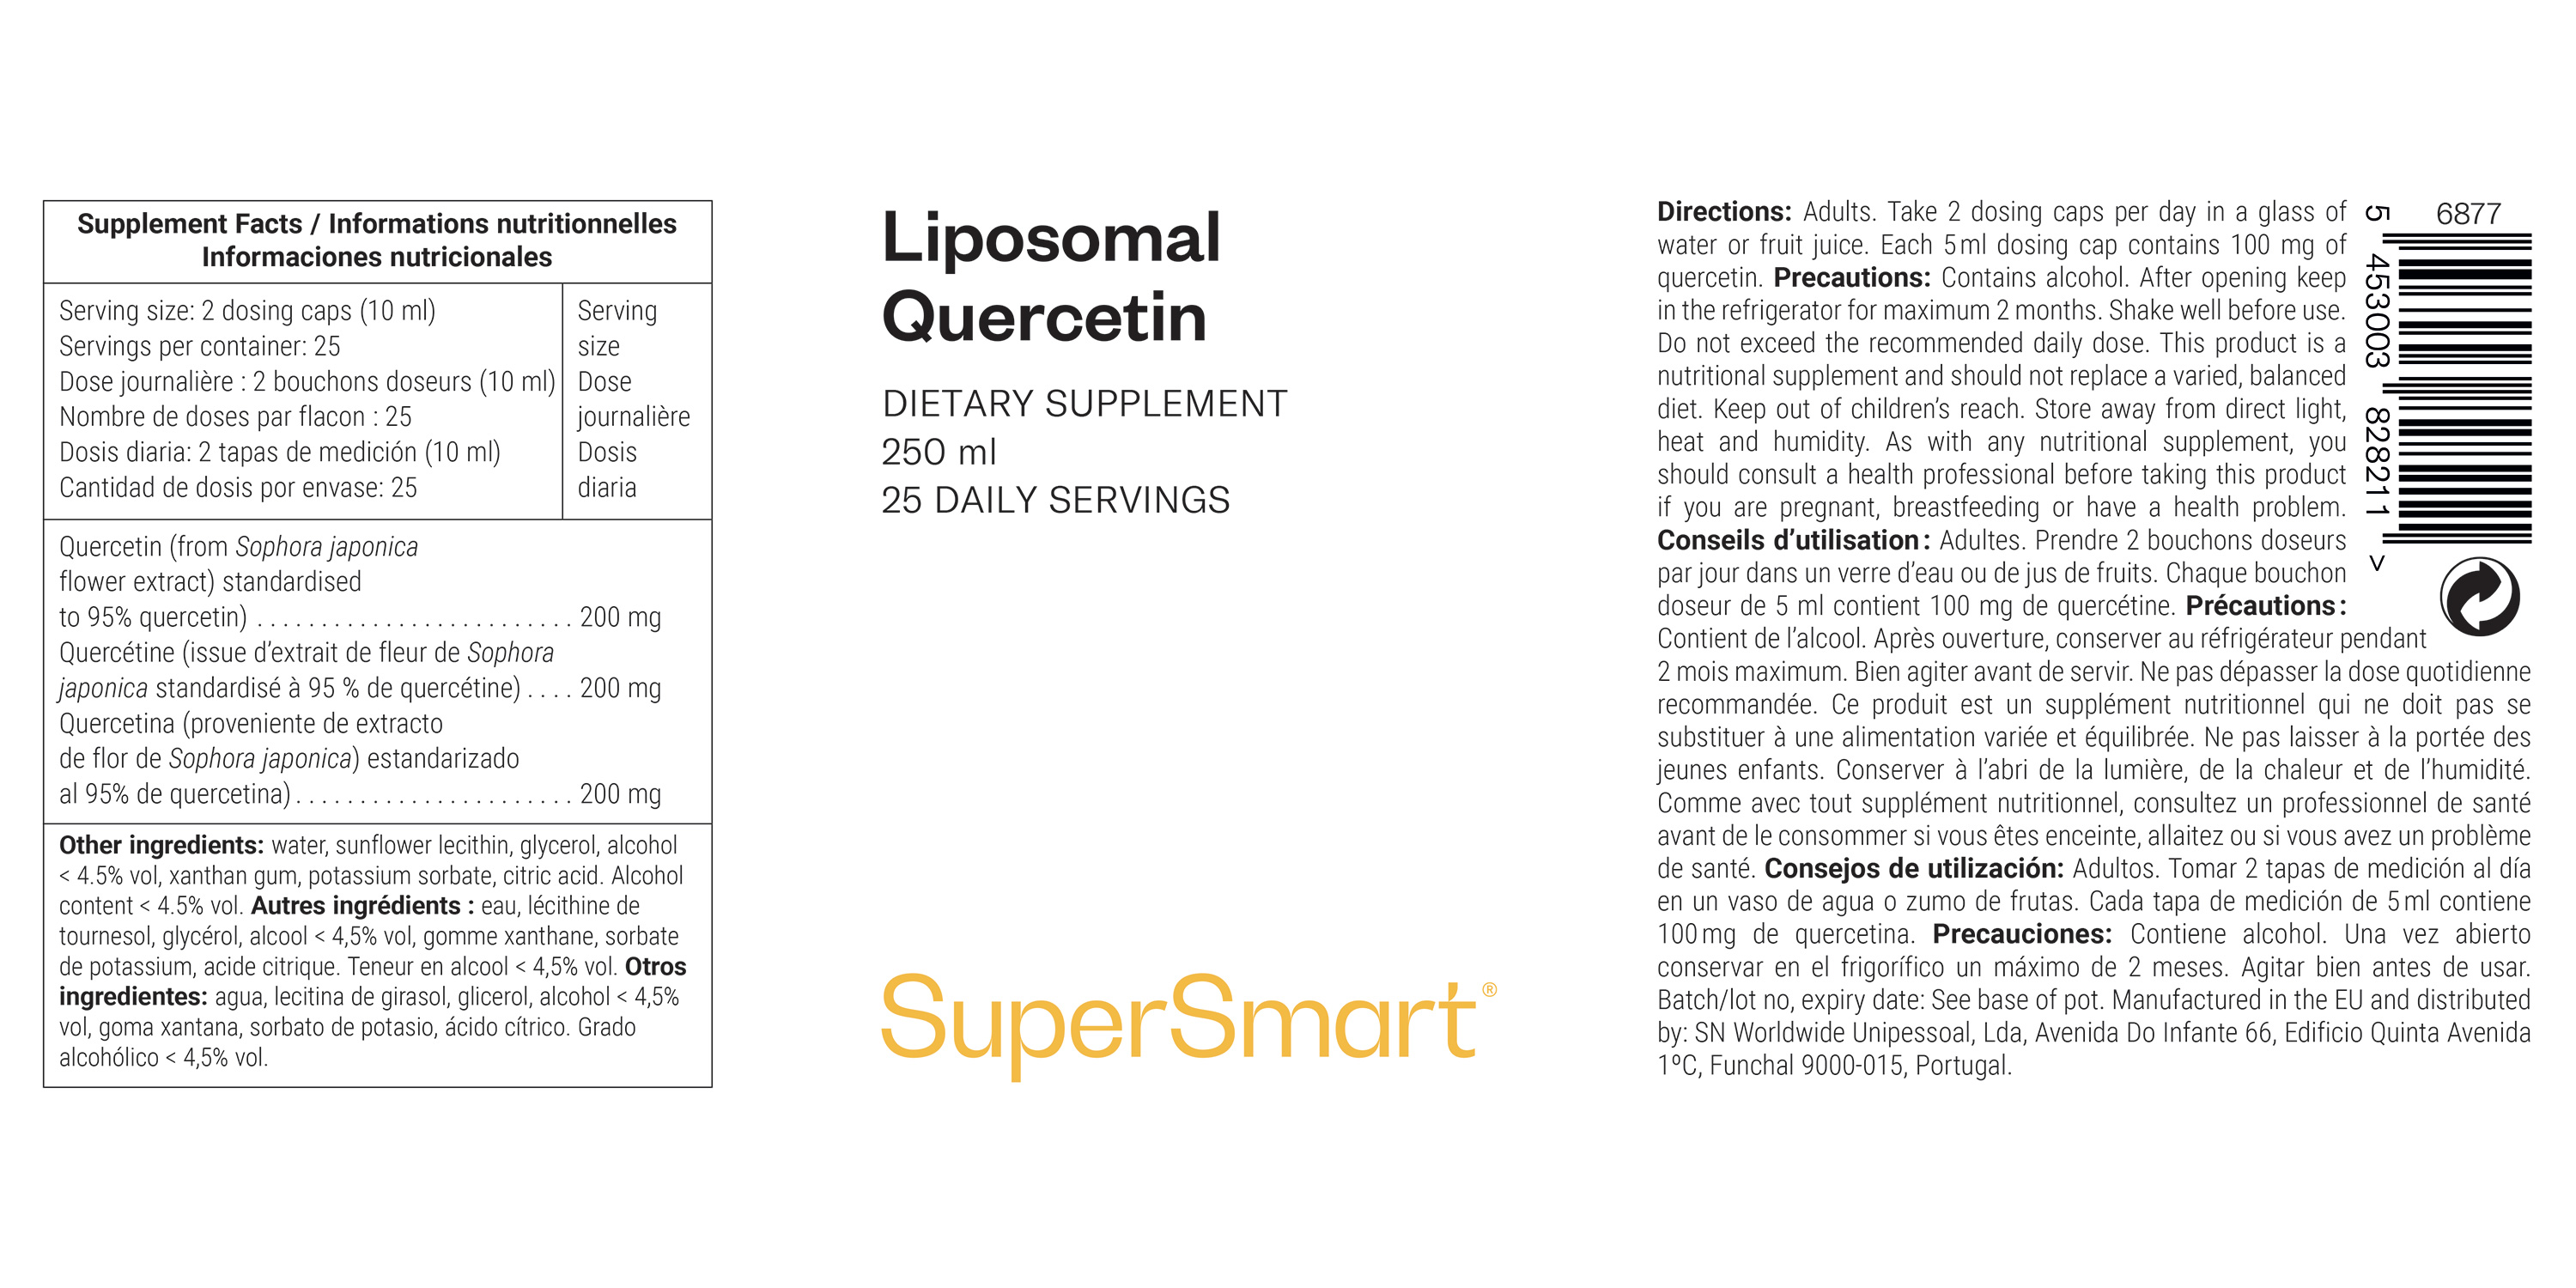 Natural liposomal quercetin 